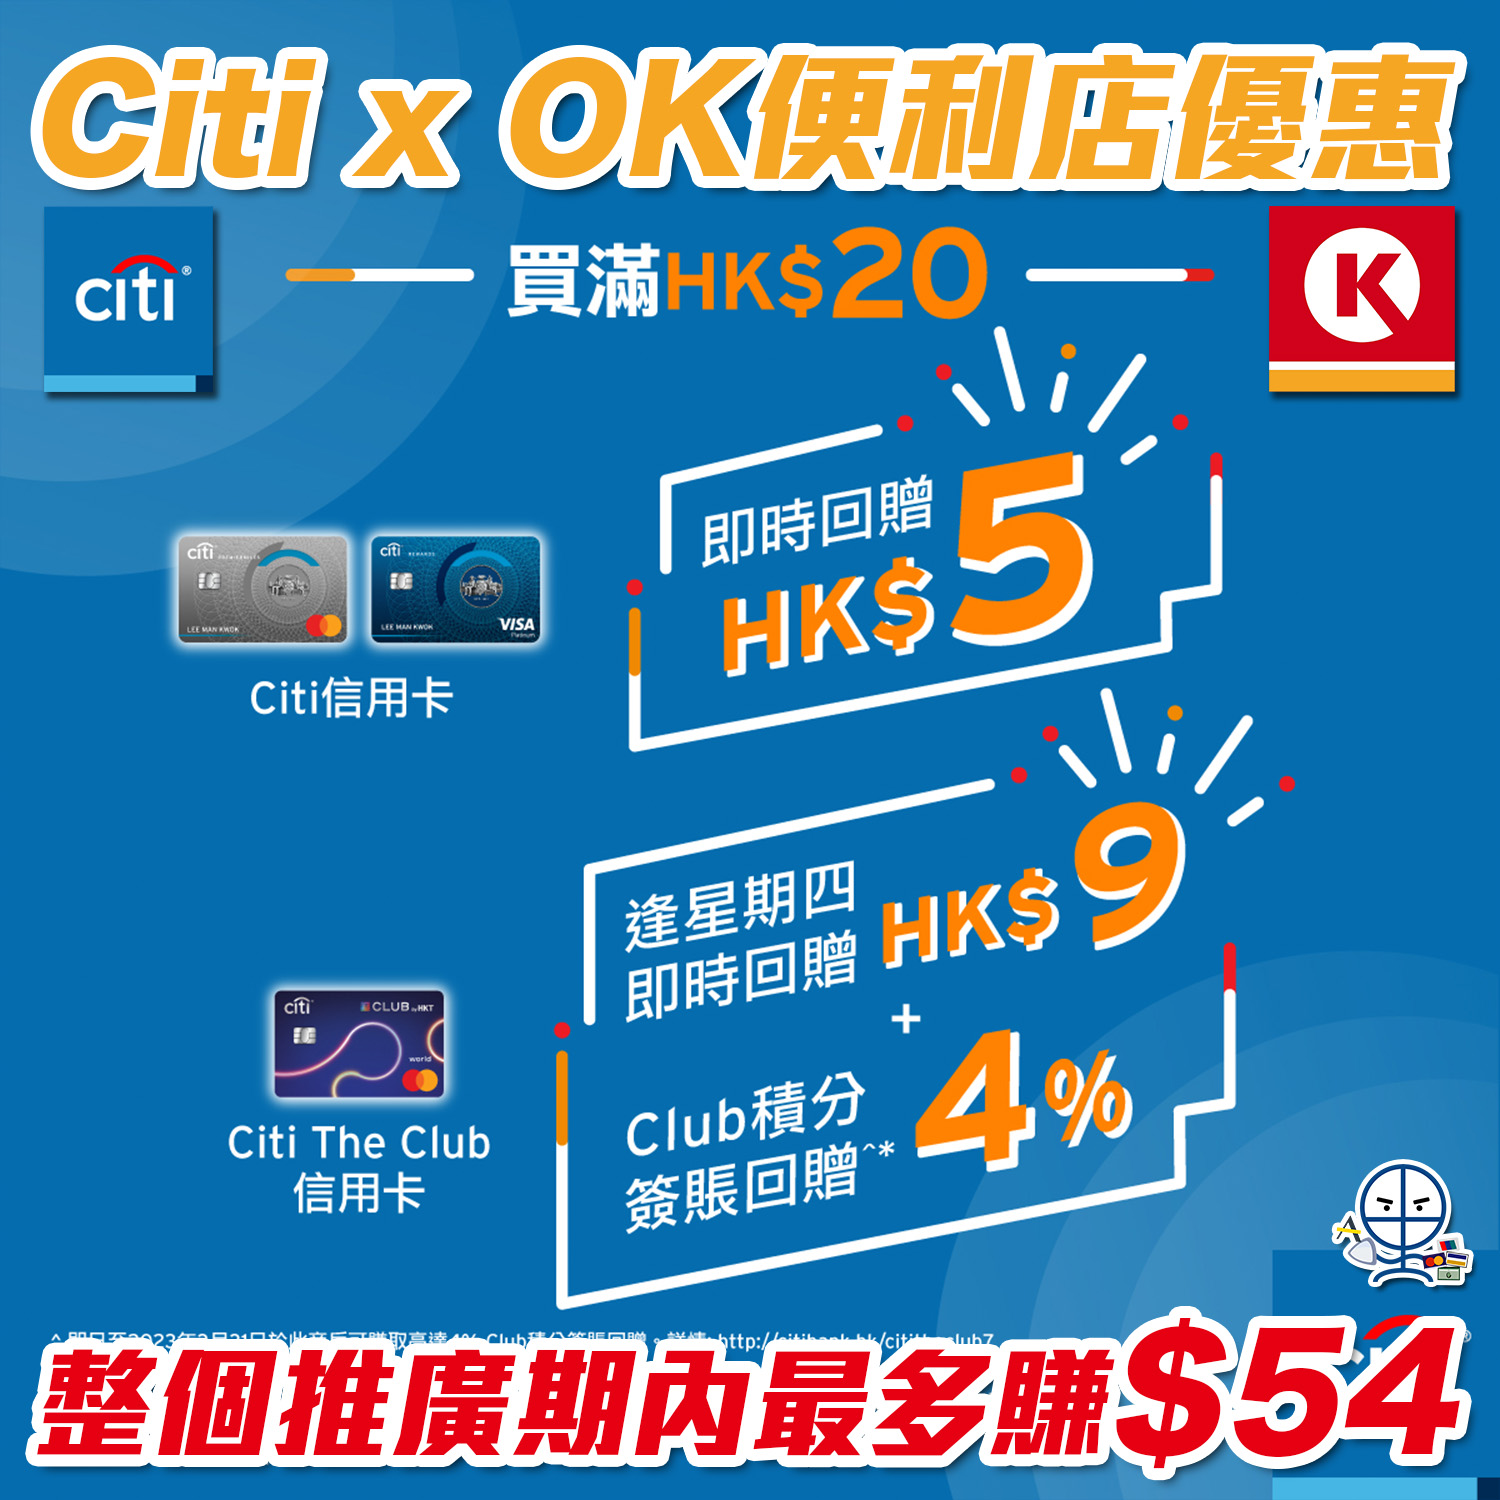 【Citibank OK便利店優惠】 用Citi信用卡去Circle K買滿HK$20享高達HK$9即時回贈！